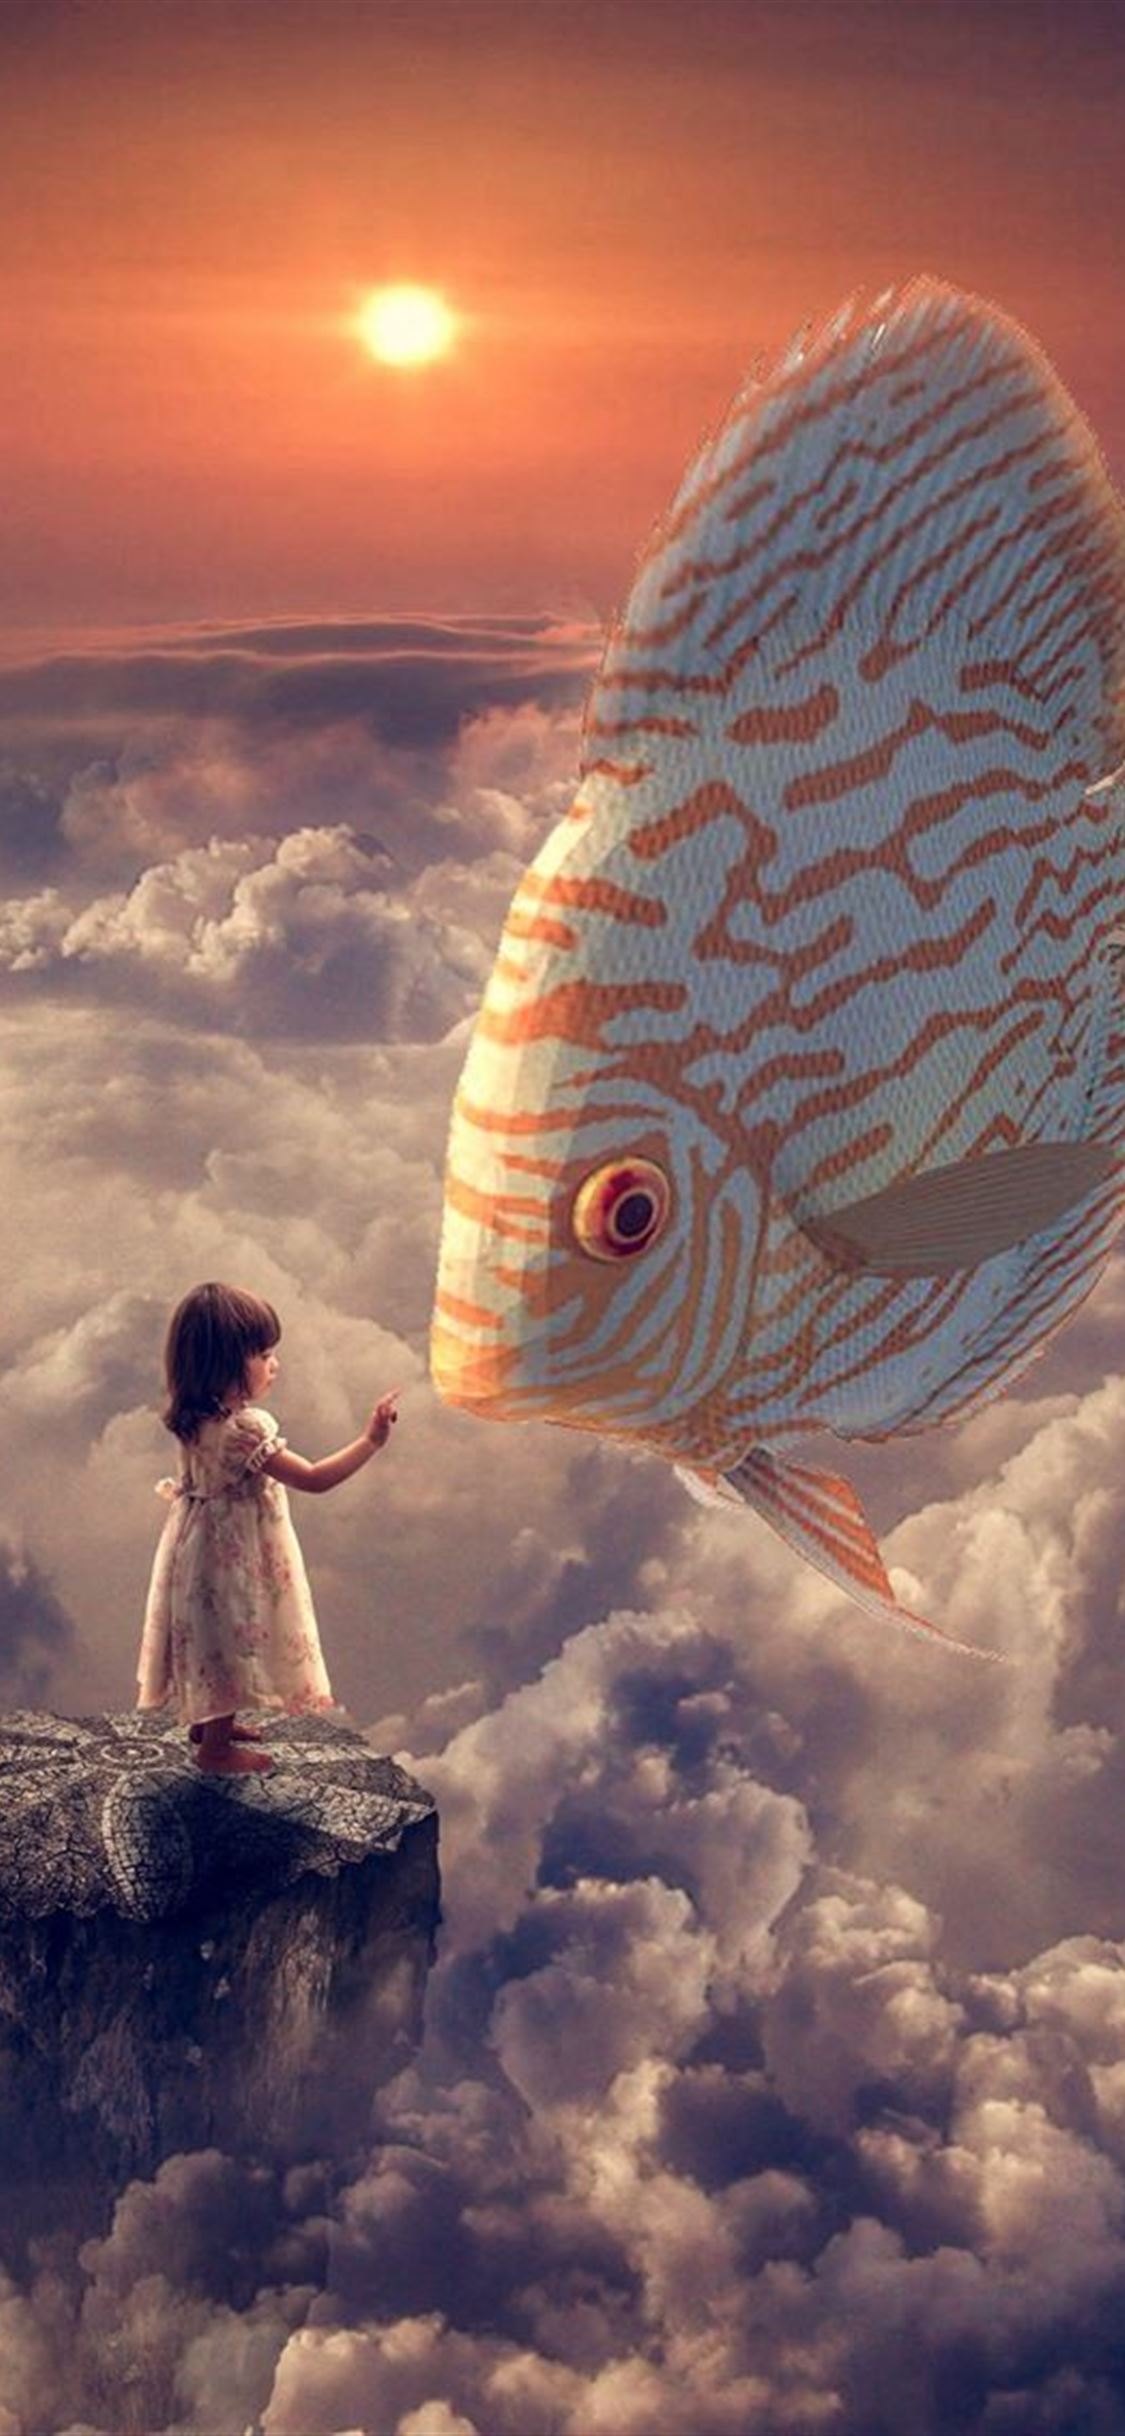 Anime Fantasy Girl Fish Clouds Sky iPhone wallpaper 